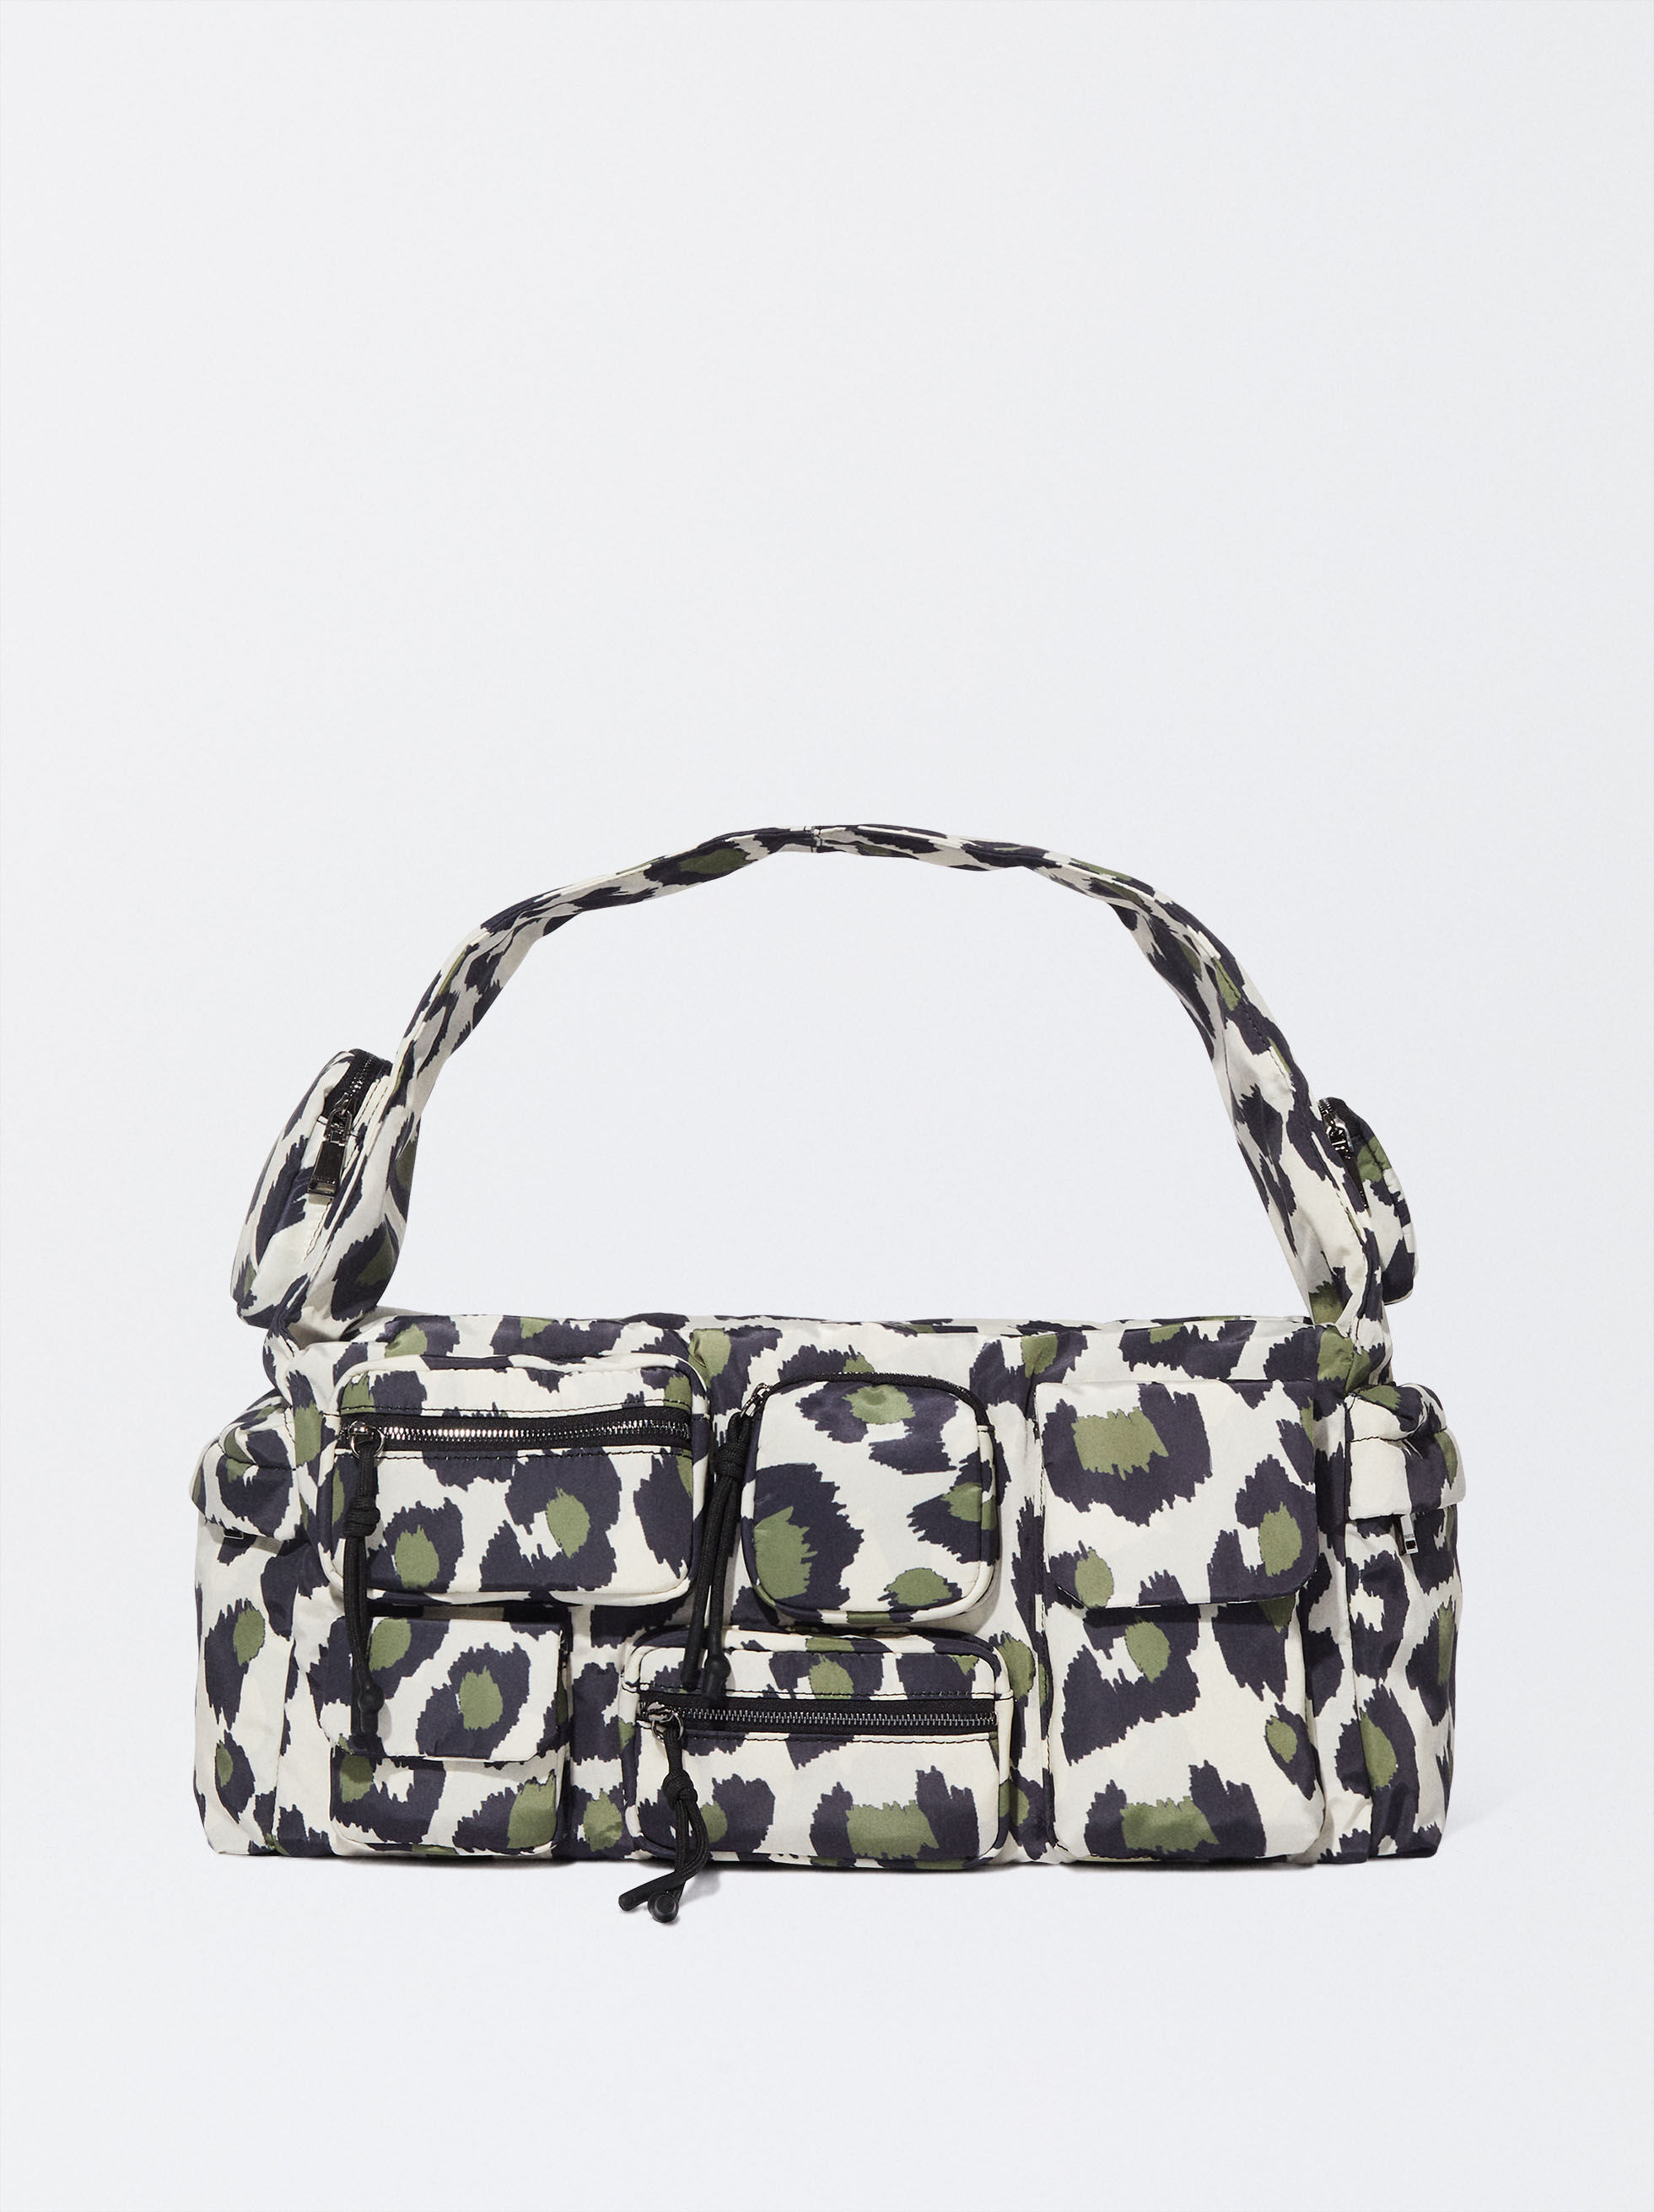 Nicole Miller Animal Print Crossbody Bags & Handbags for Women for sale |  eBay